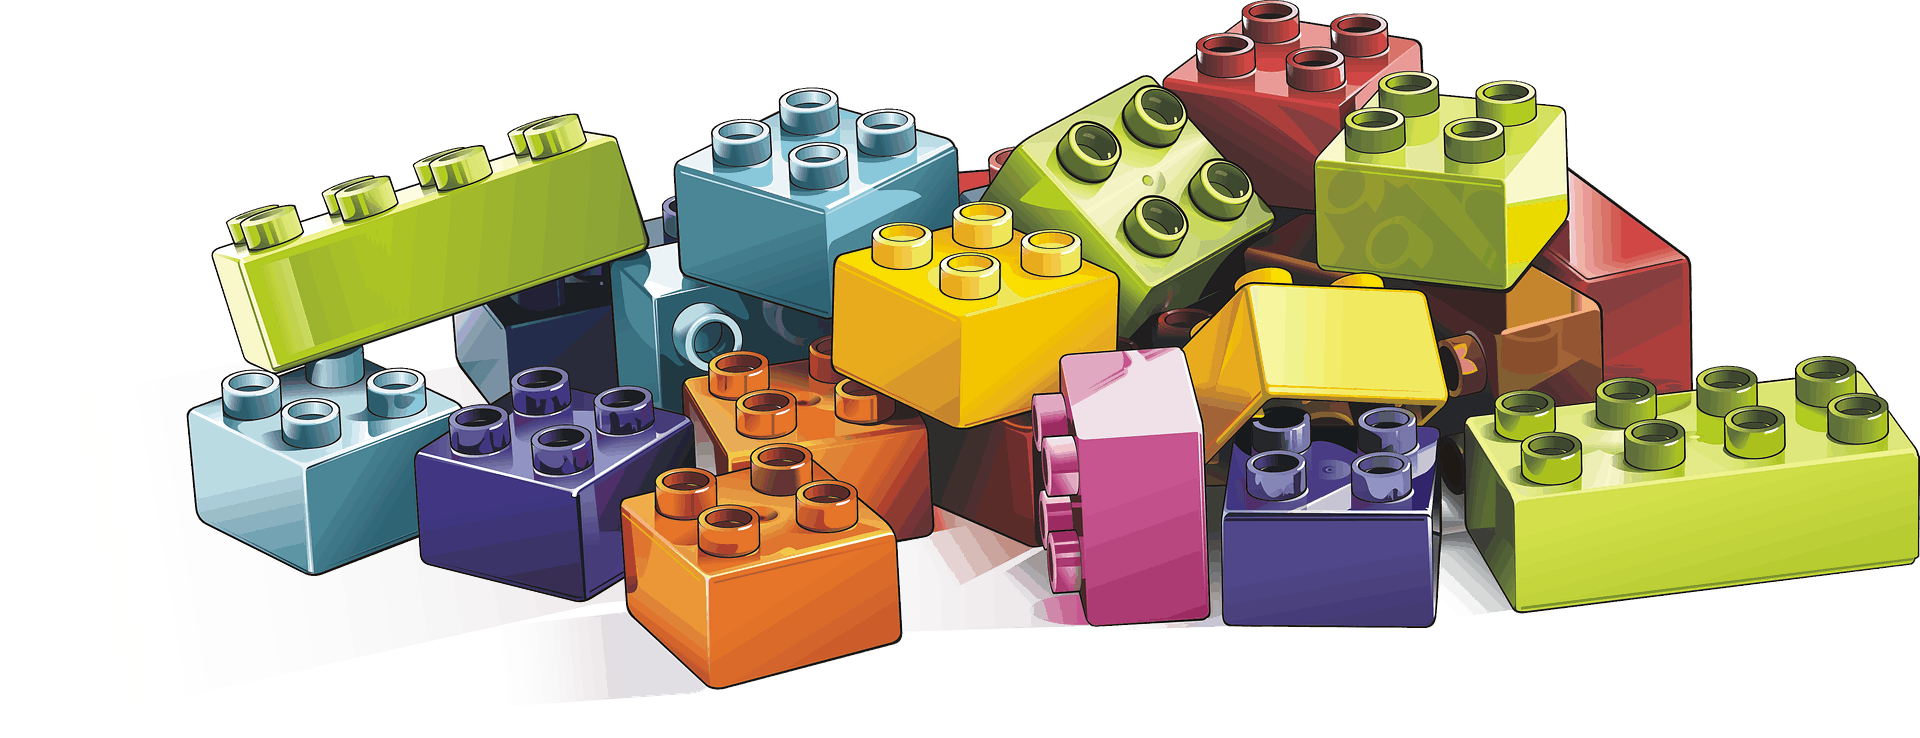 How To Print LEGO Bricks Using Your 3-D Printer